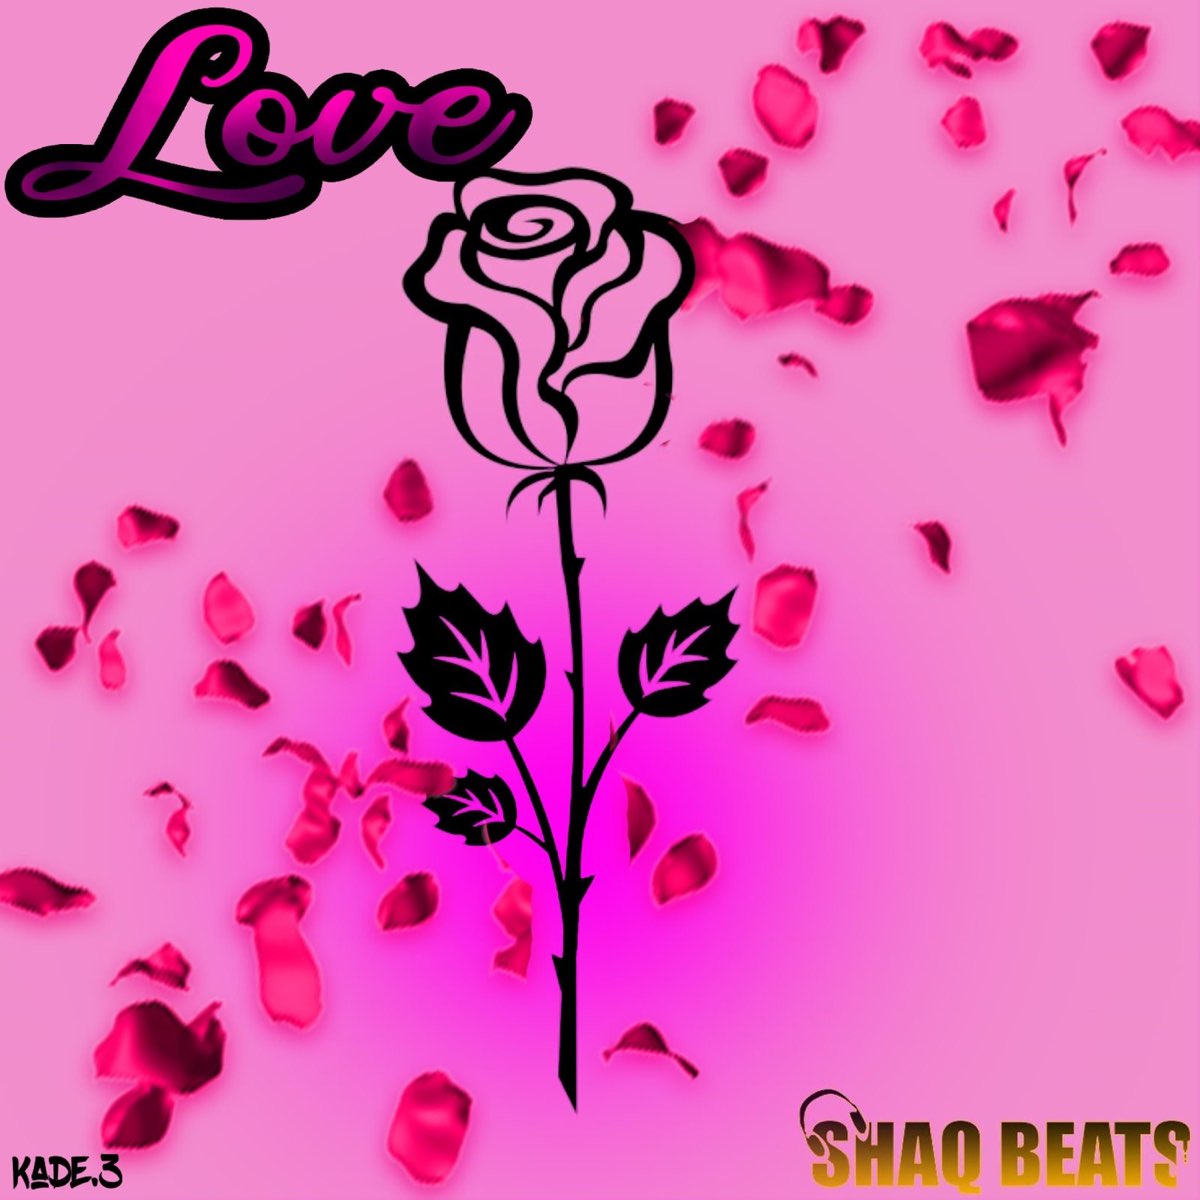 Love - Single by Shaq Beats on Apple Music